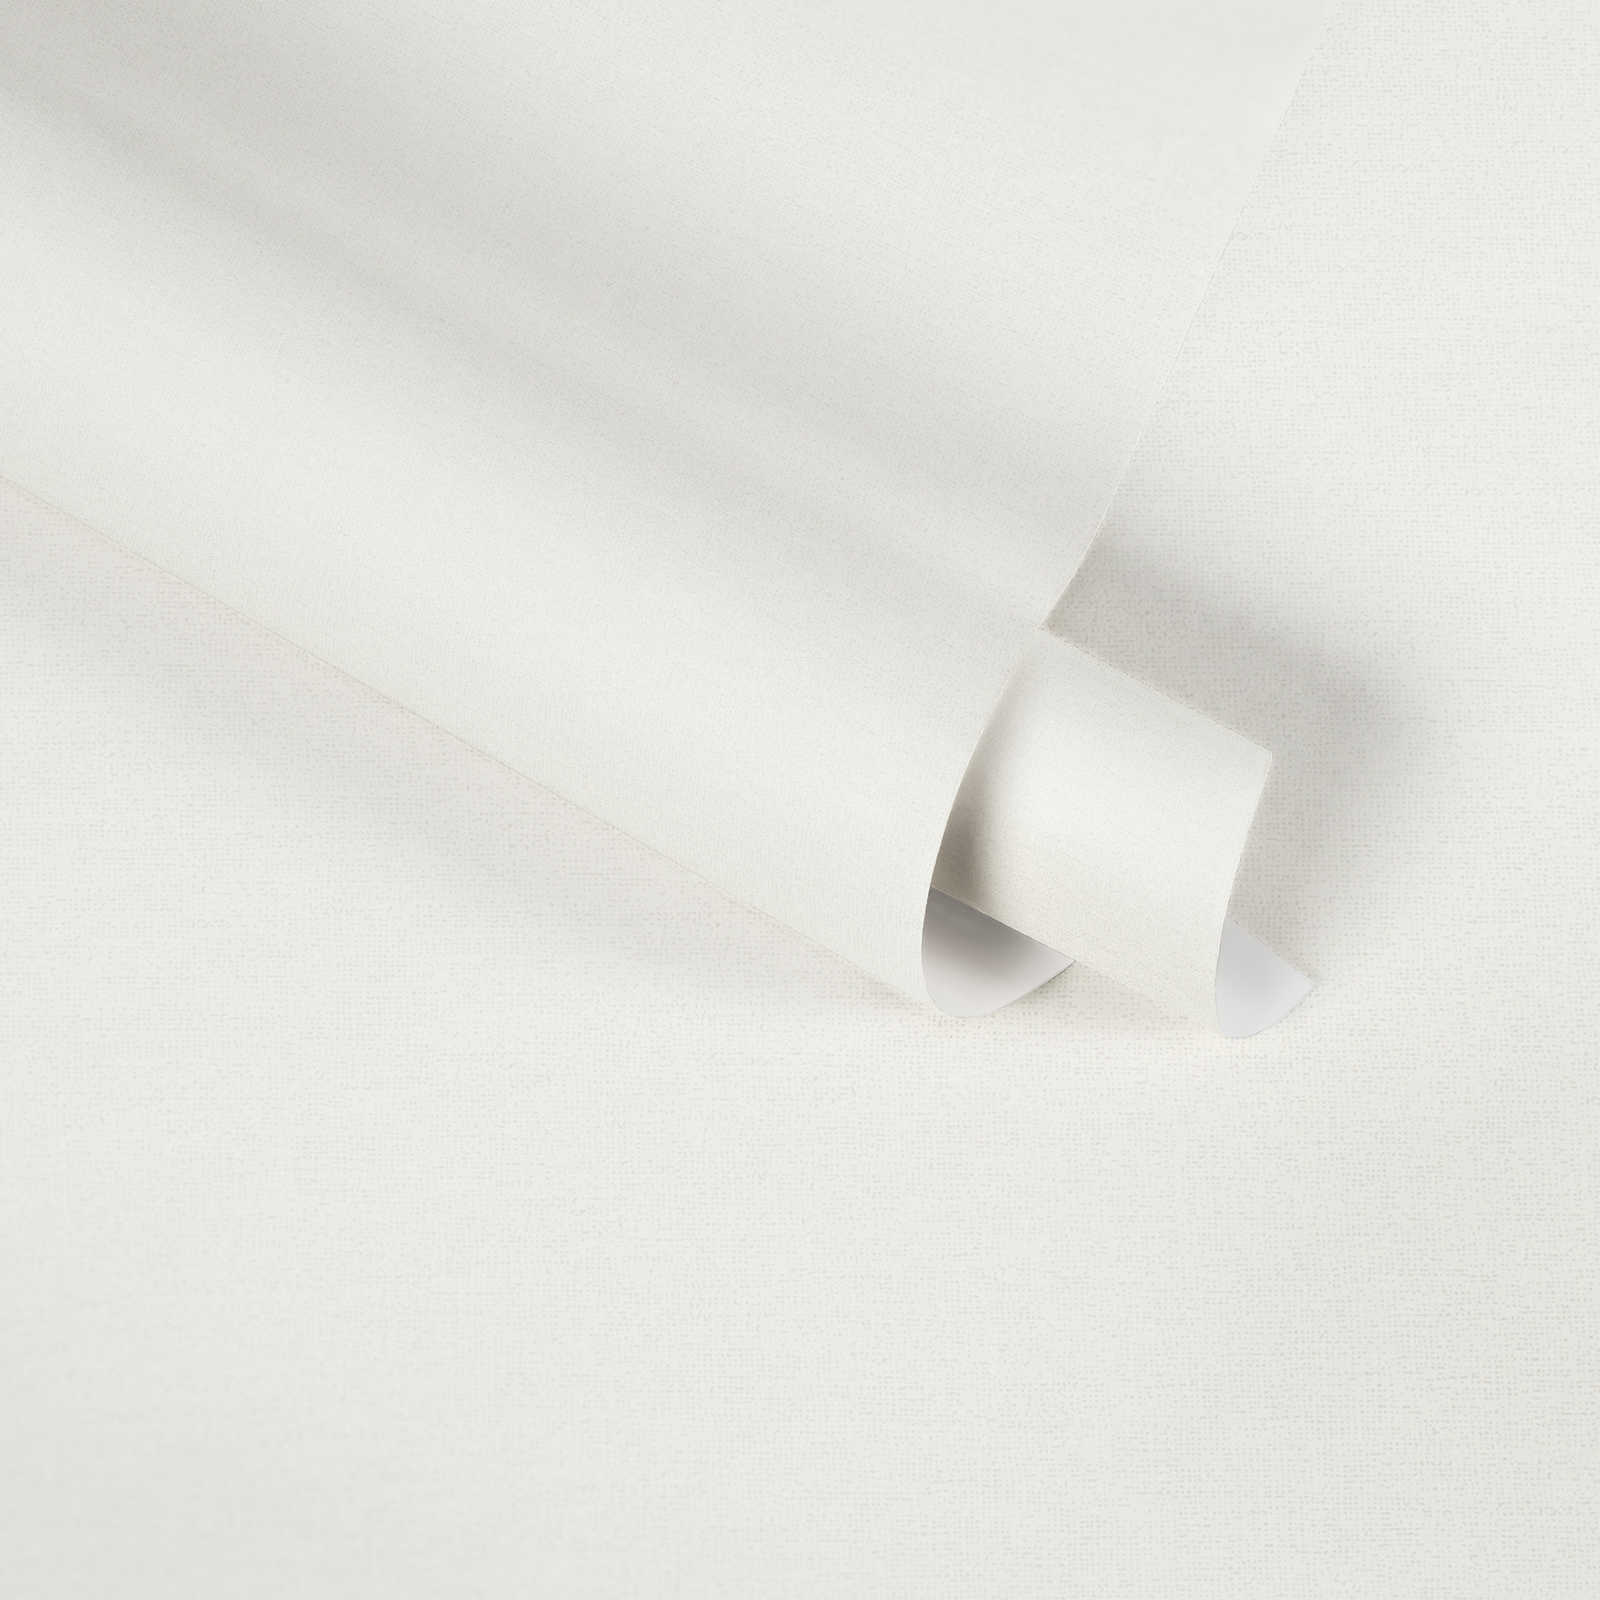             Non-woven wallpaper from MICHALSKY monochrome, matte in white
        